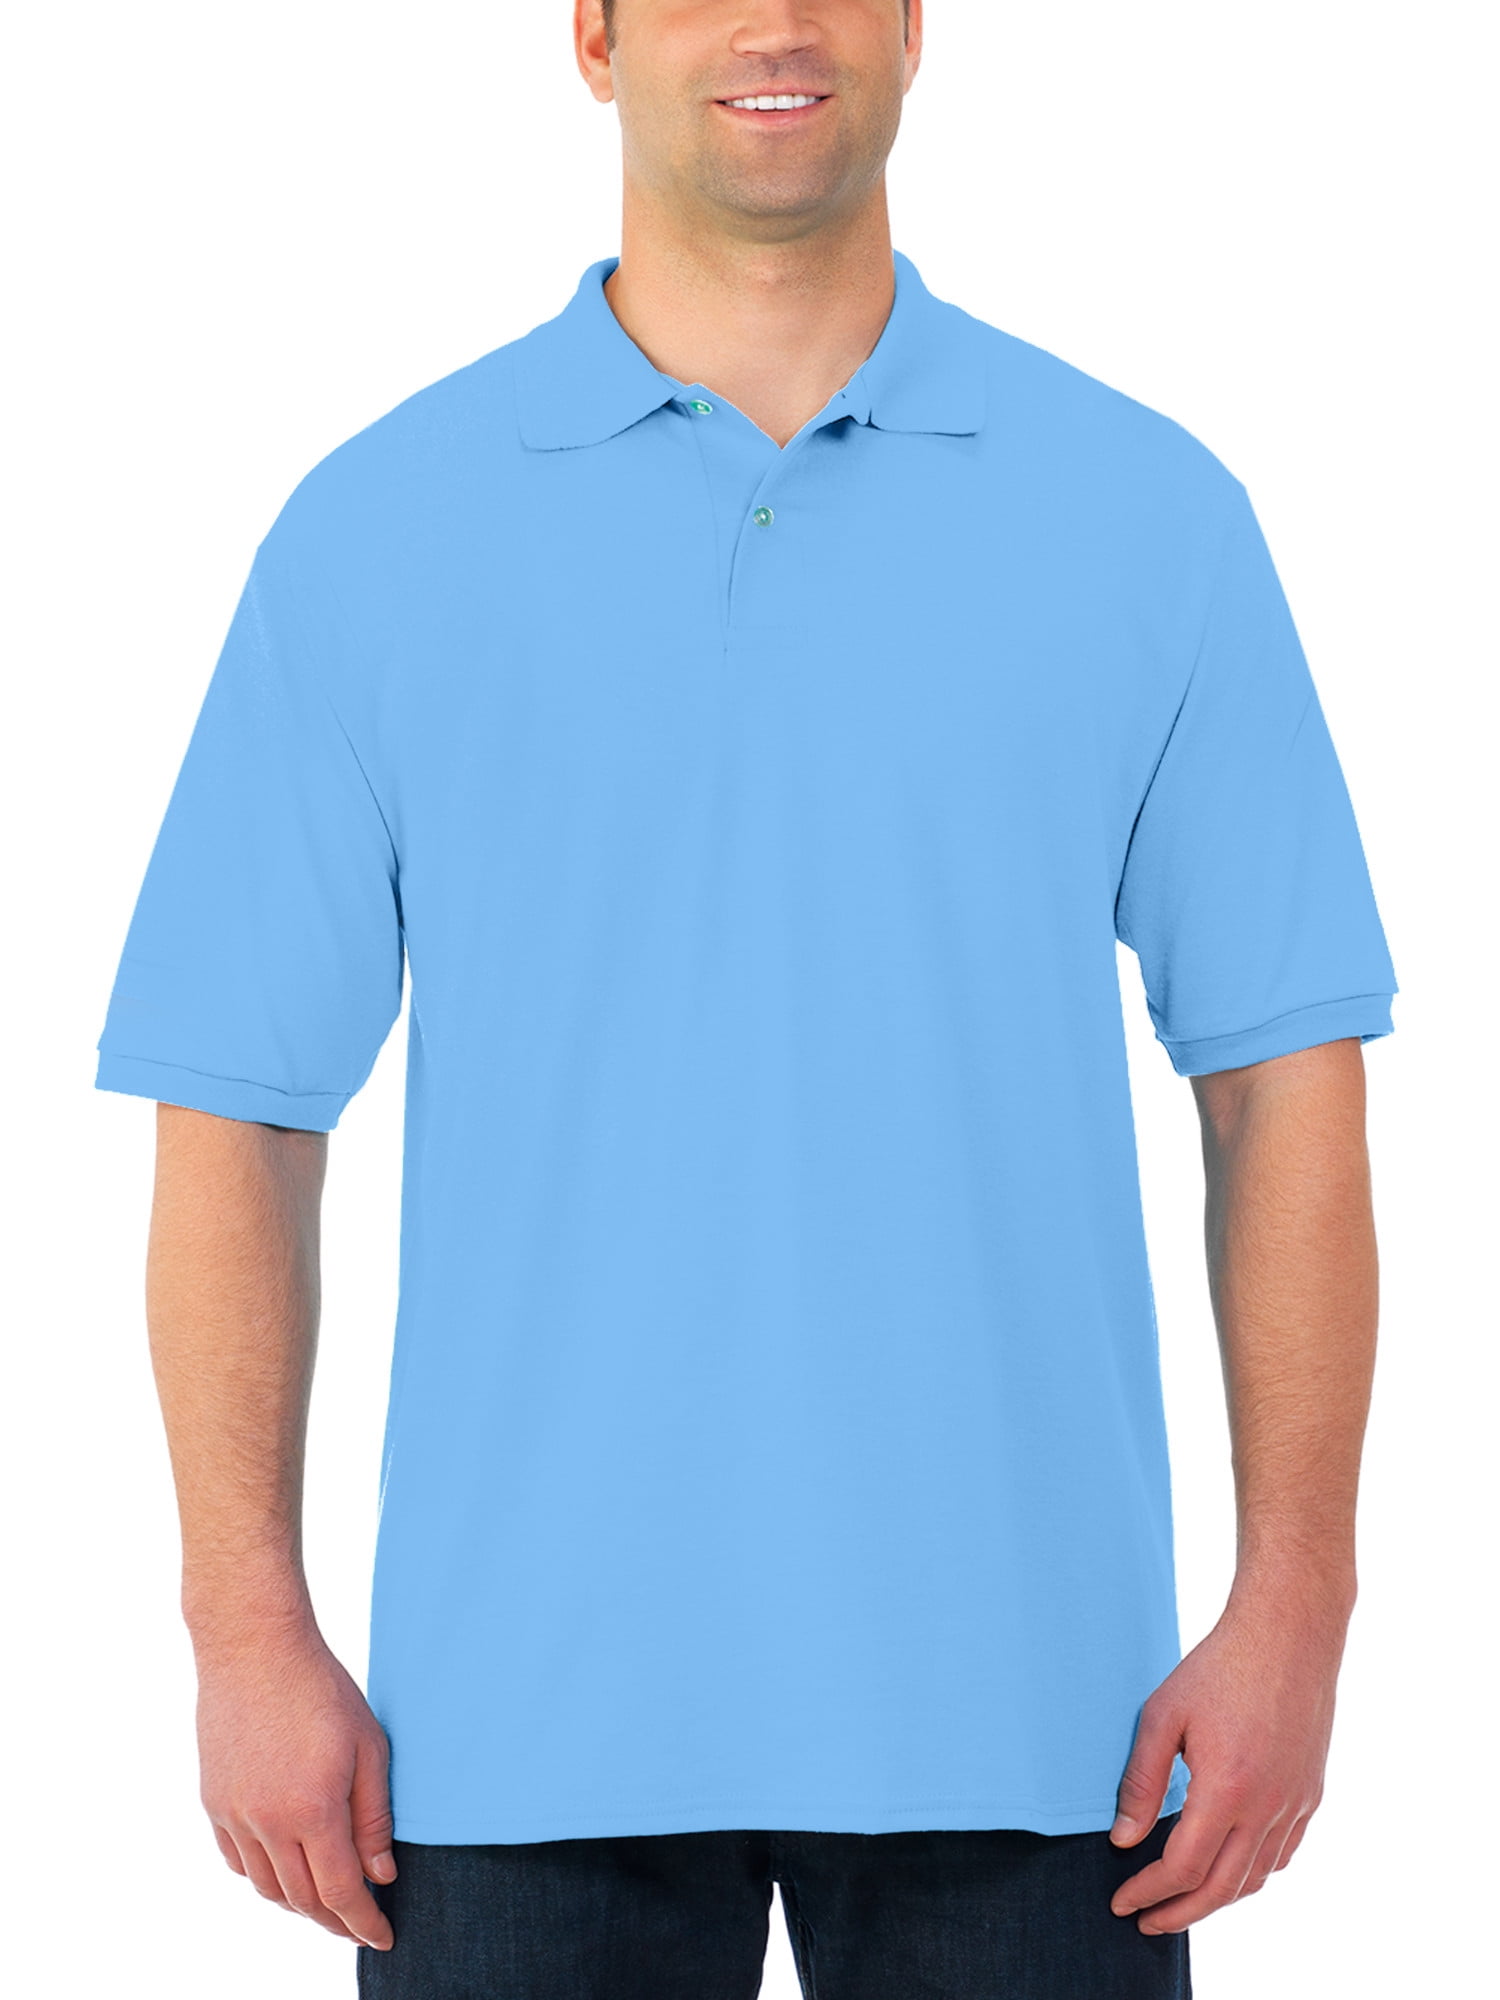 Jerzees Men's Spotshield Short Sleeve Polo Shirt - Walmart.com